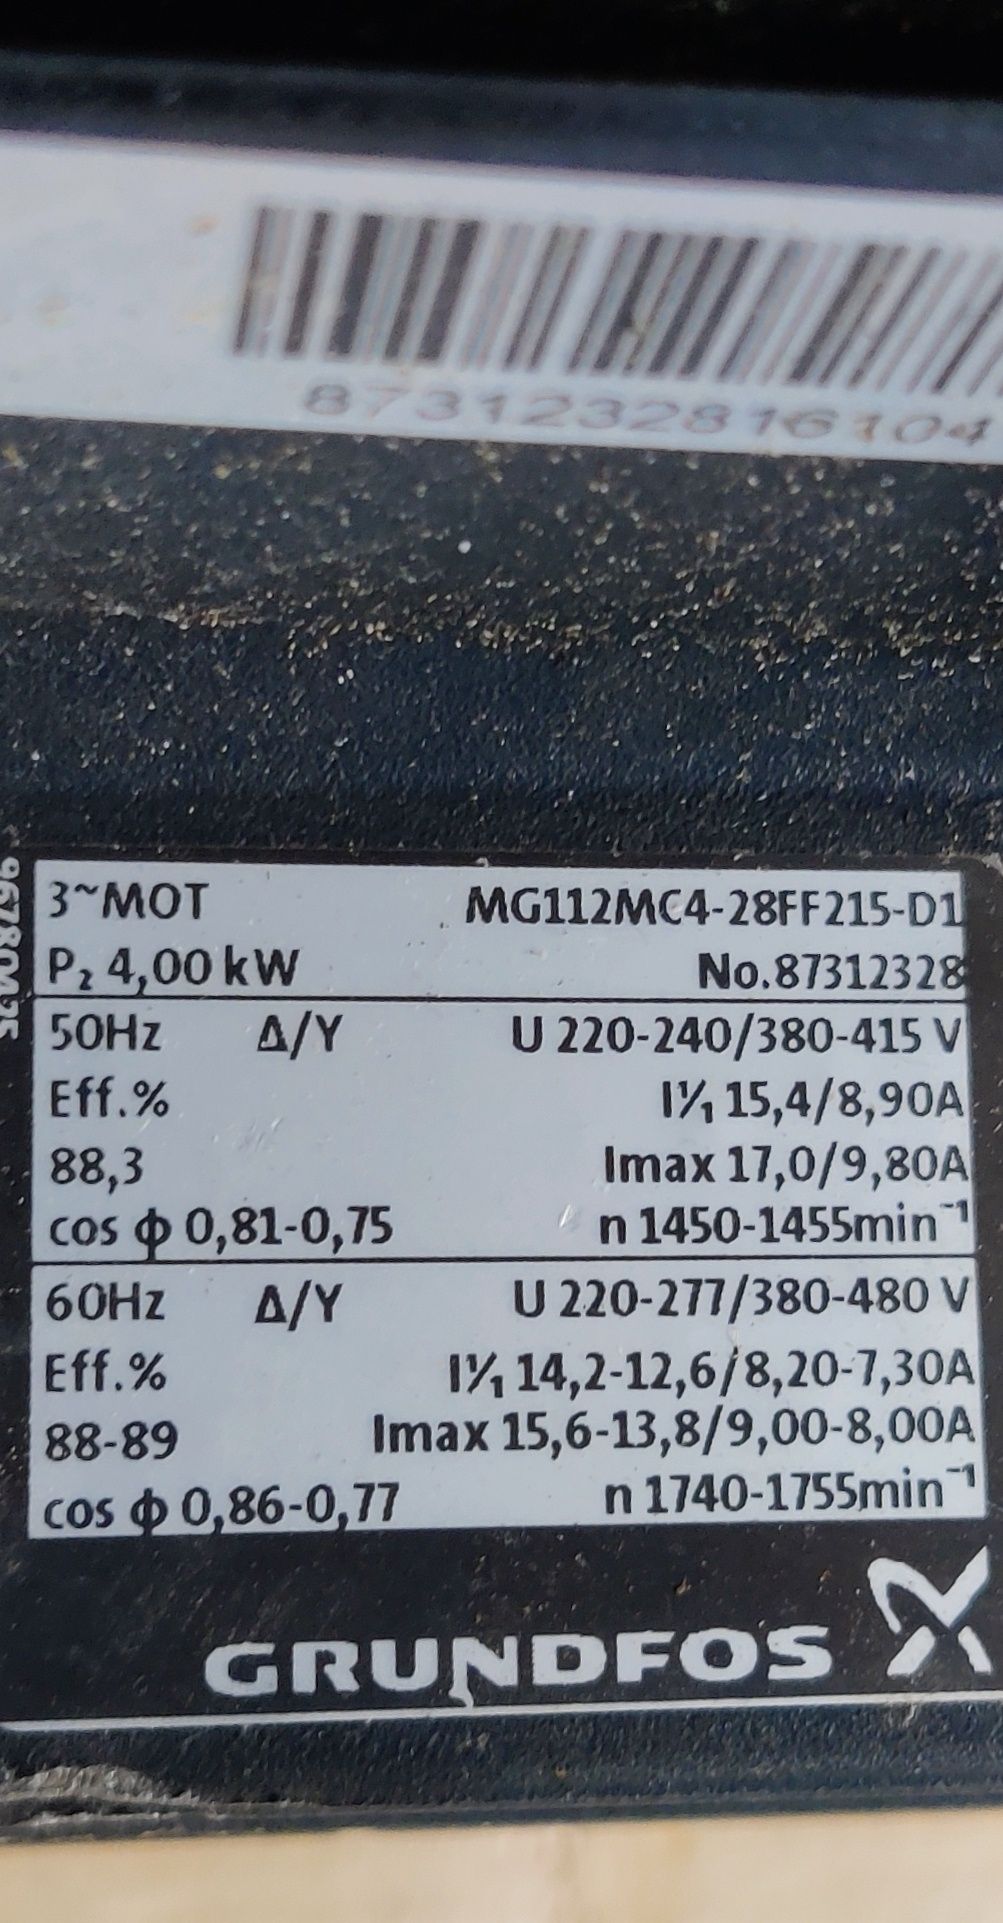 Pompa Grundfos MG112MC4